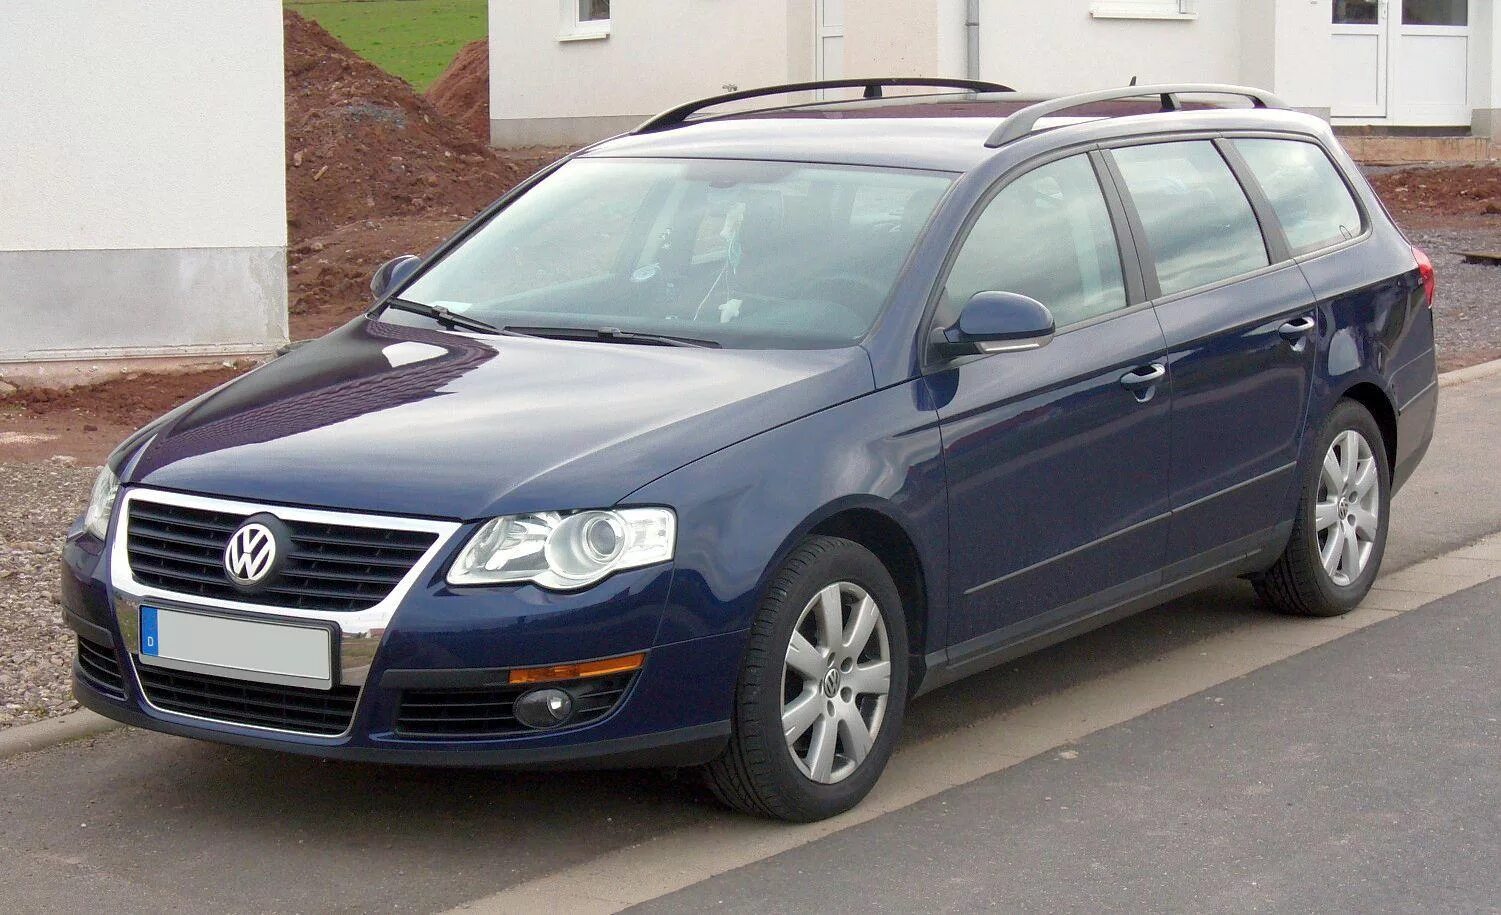 Vw b6 2.0. Volkswagen Passat b6 variant. Фольксваген Пассат b6 универсал. Volkswagen Passat variant (b6) 2008. Фольксваген ПСАДА б6 универсал.